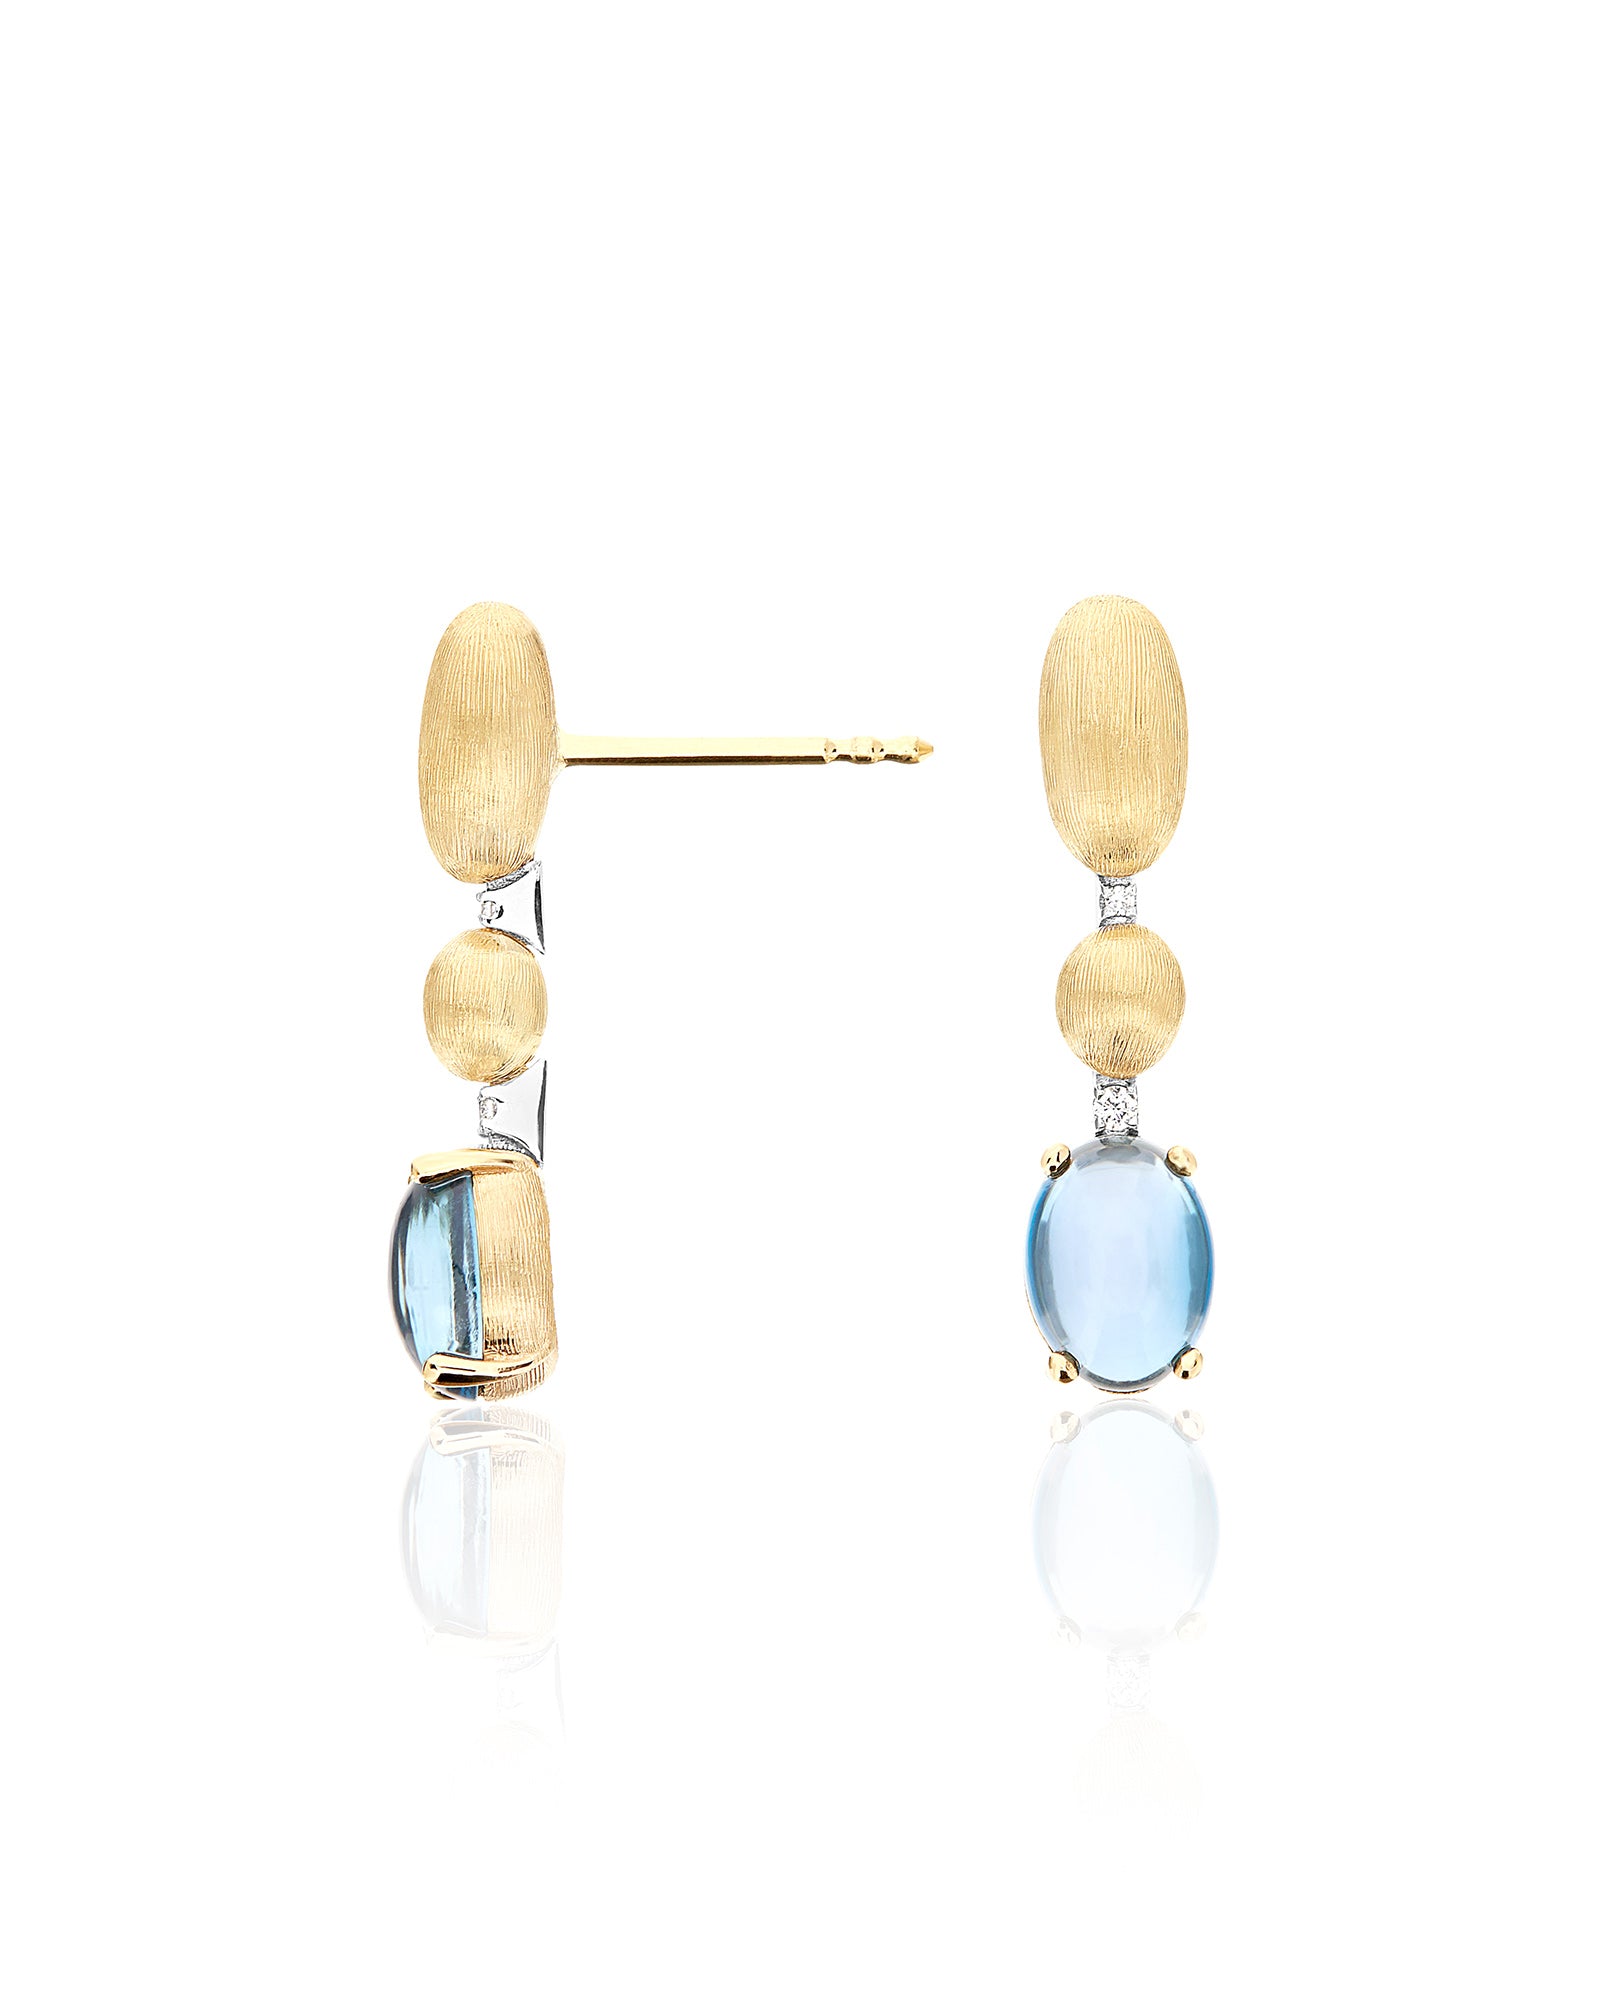 "Azure" Gold, London Blue Topaz boules and diamonds accents short earrings